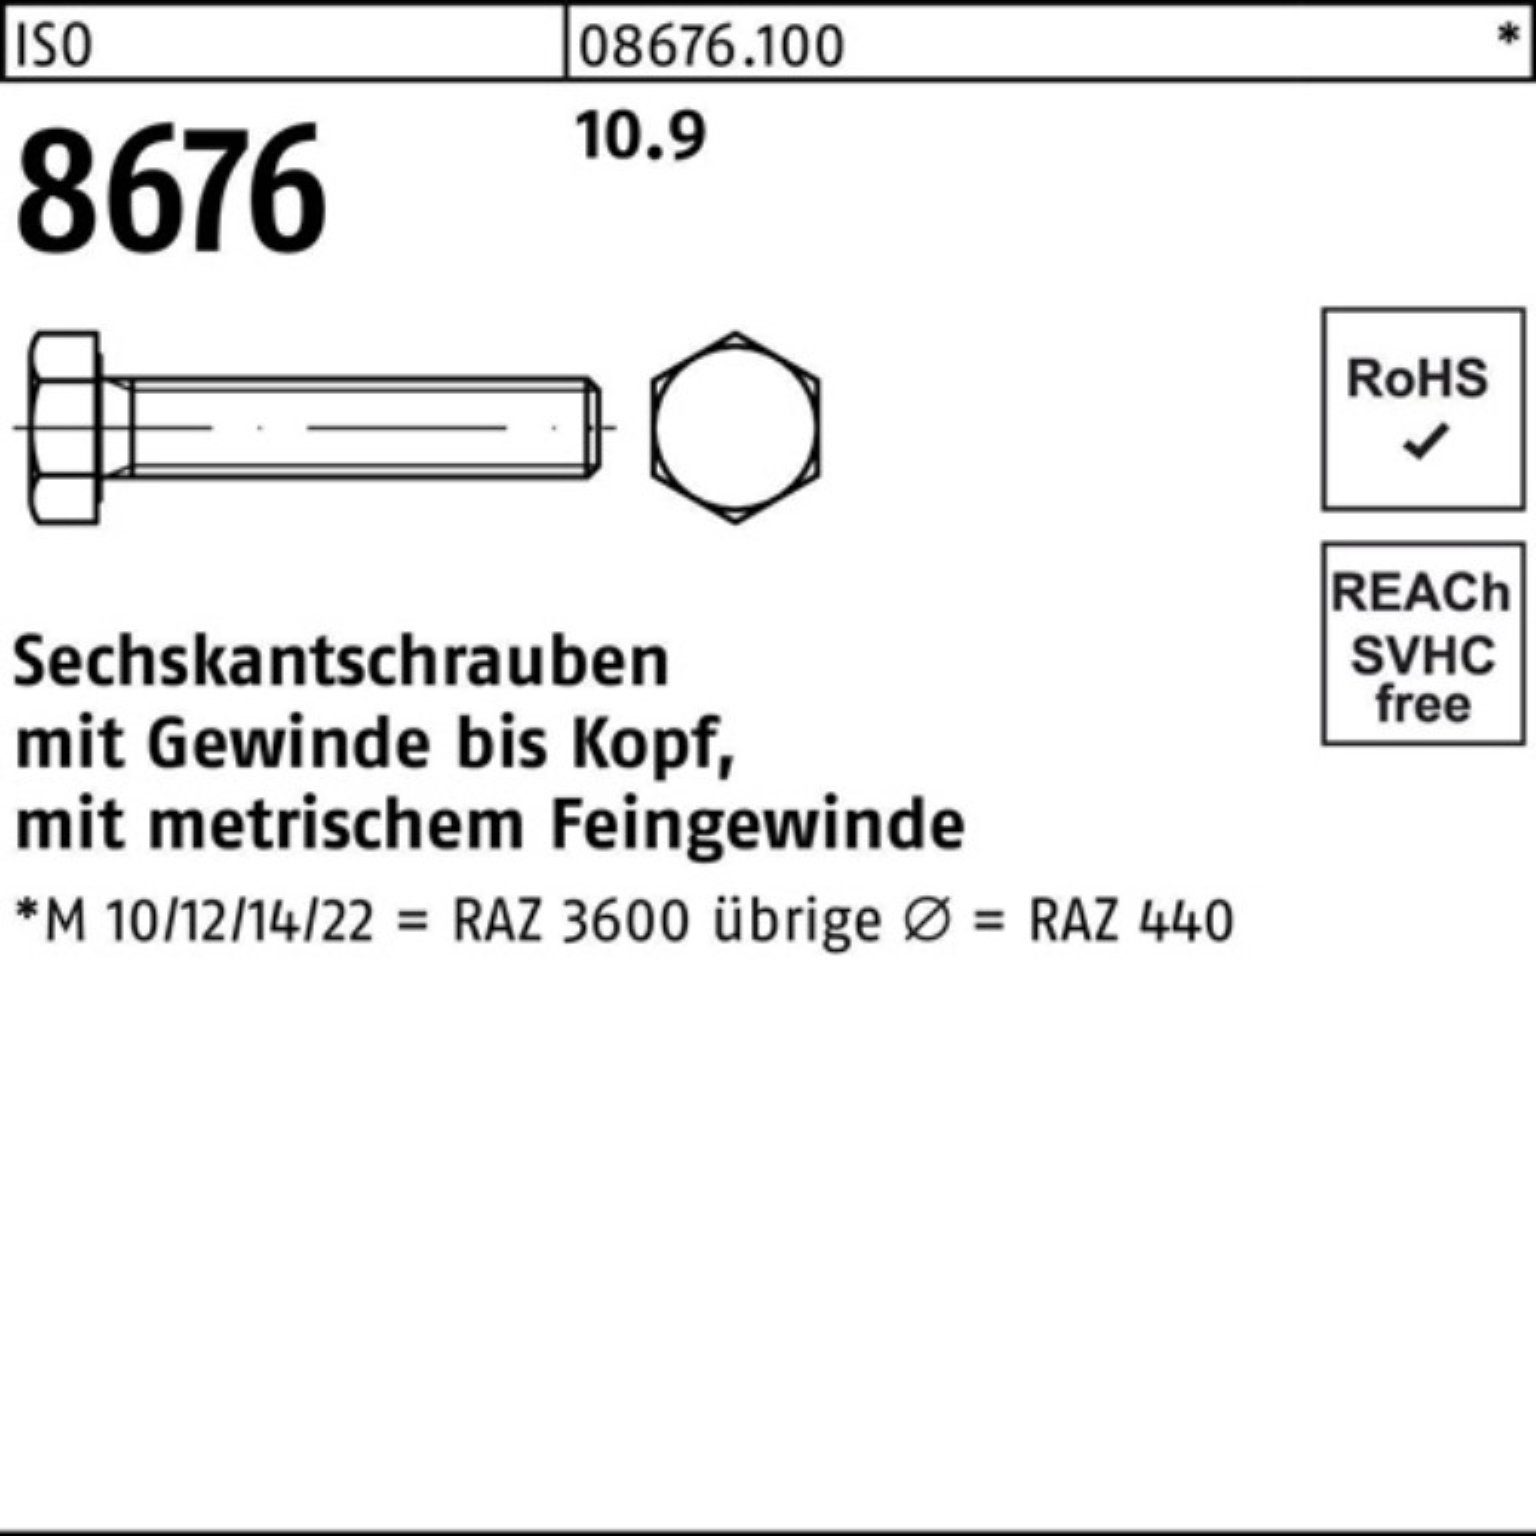 Reyher Sechskantschraube 100er Pack Sechskantschraube 8676 1 VG M36x3x180 Stück ISO 10.9 ISO 8